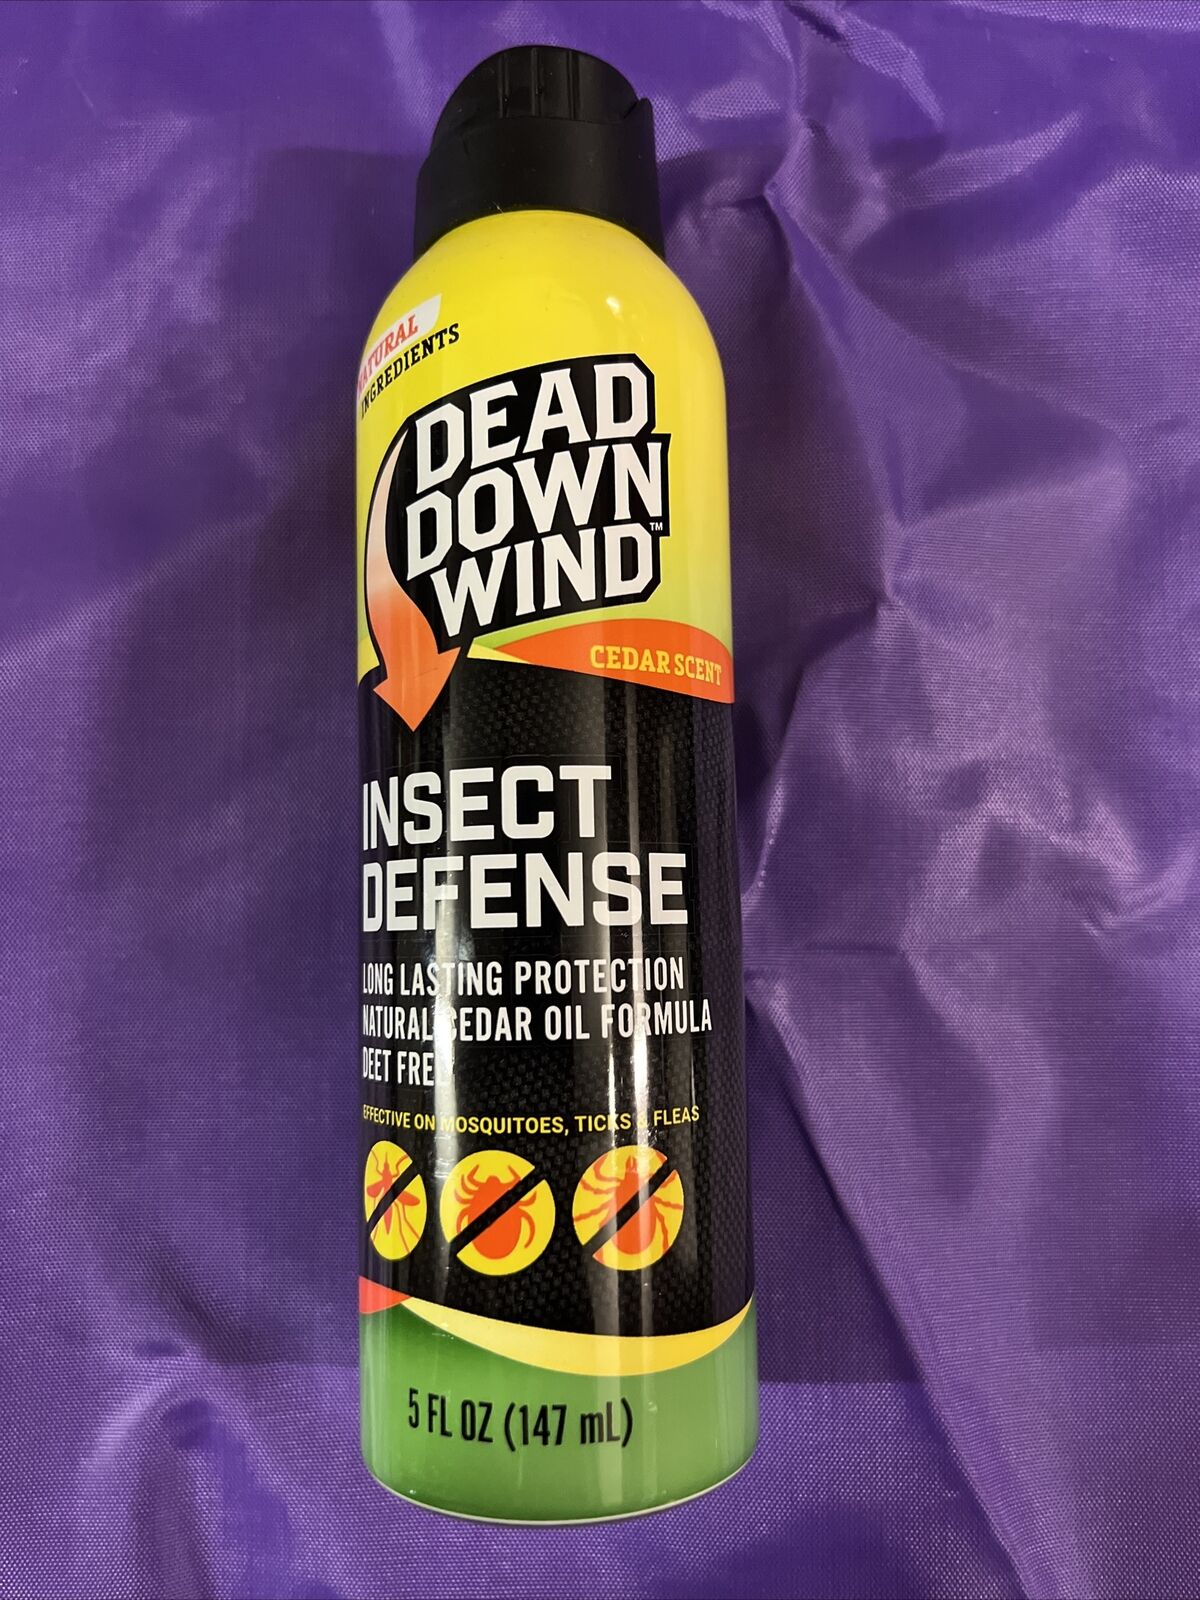 DEAD DOWN WIND MOSQUITO & TICK SHIELD 5 FL 0Z Insect Defense NATURAL